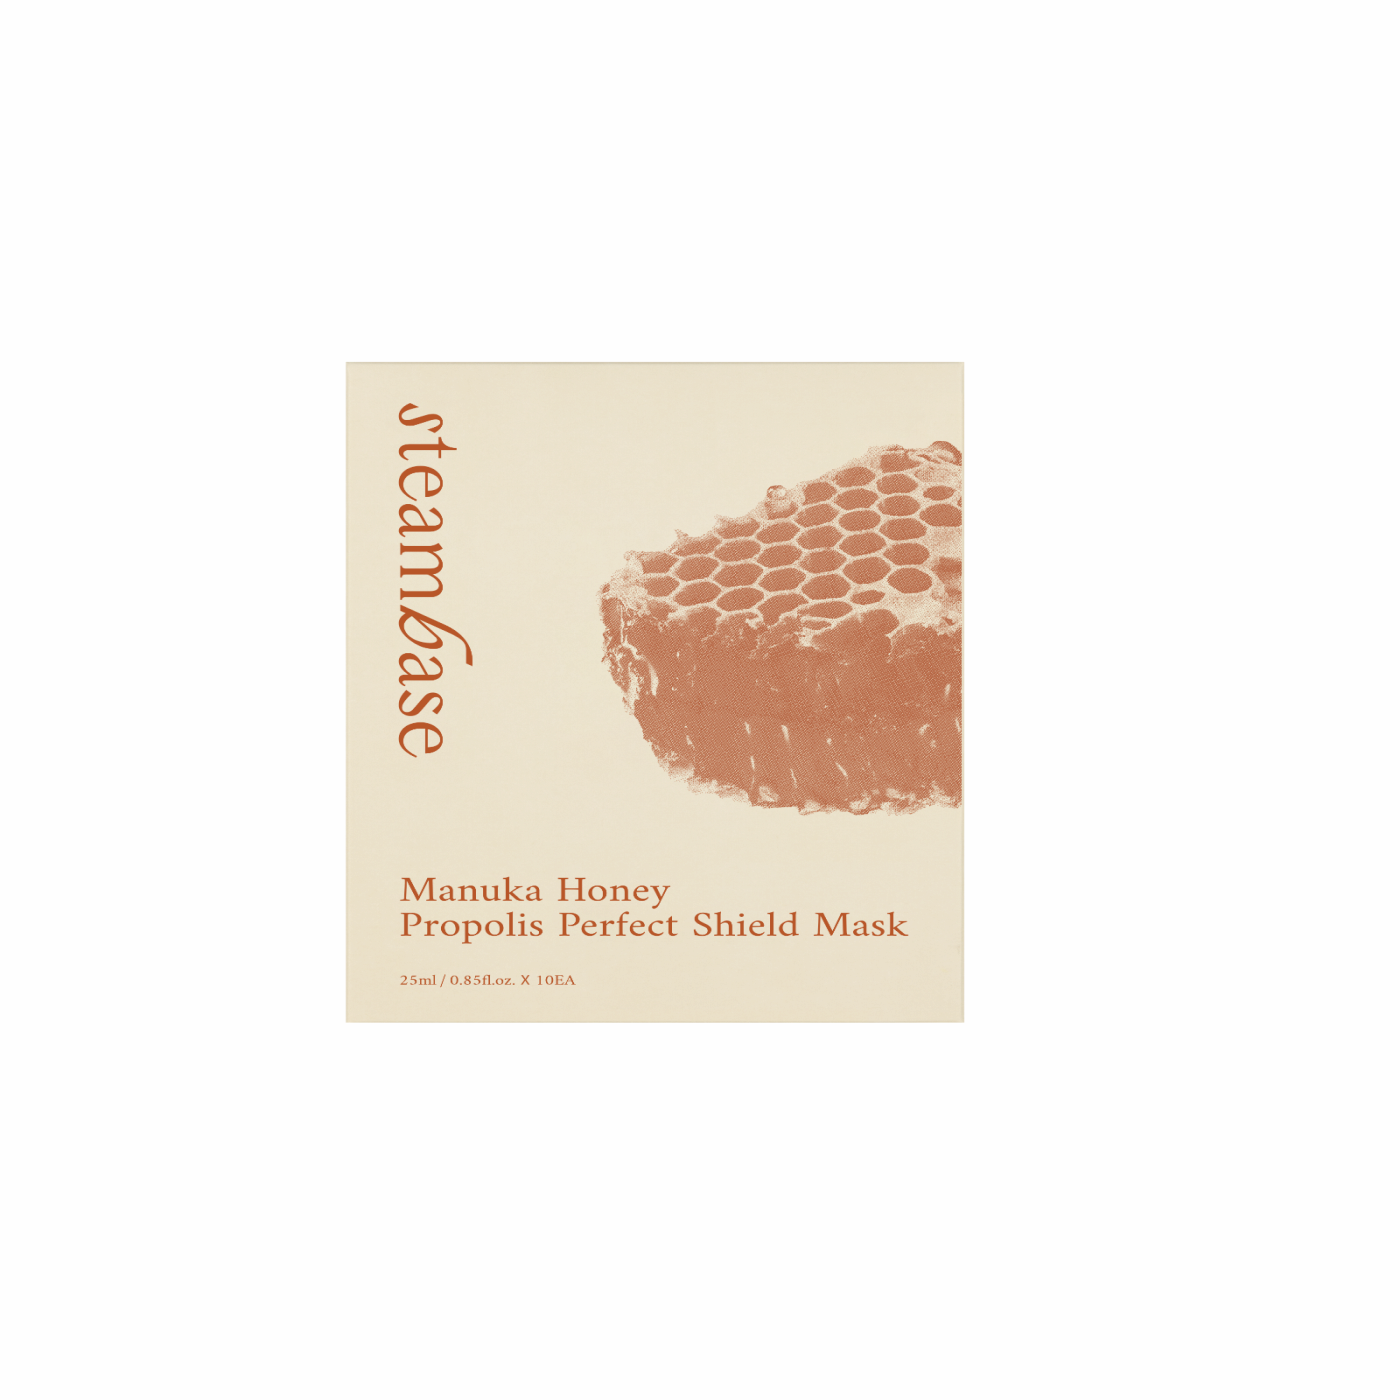 Manuka Honey Propolis Perfect Shield Mask